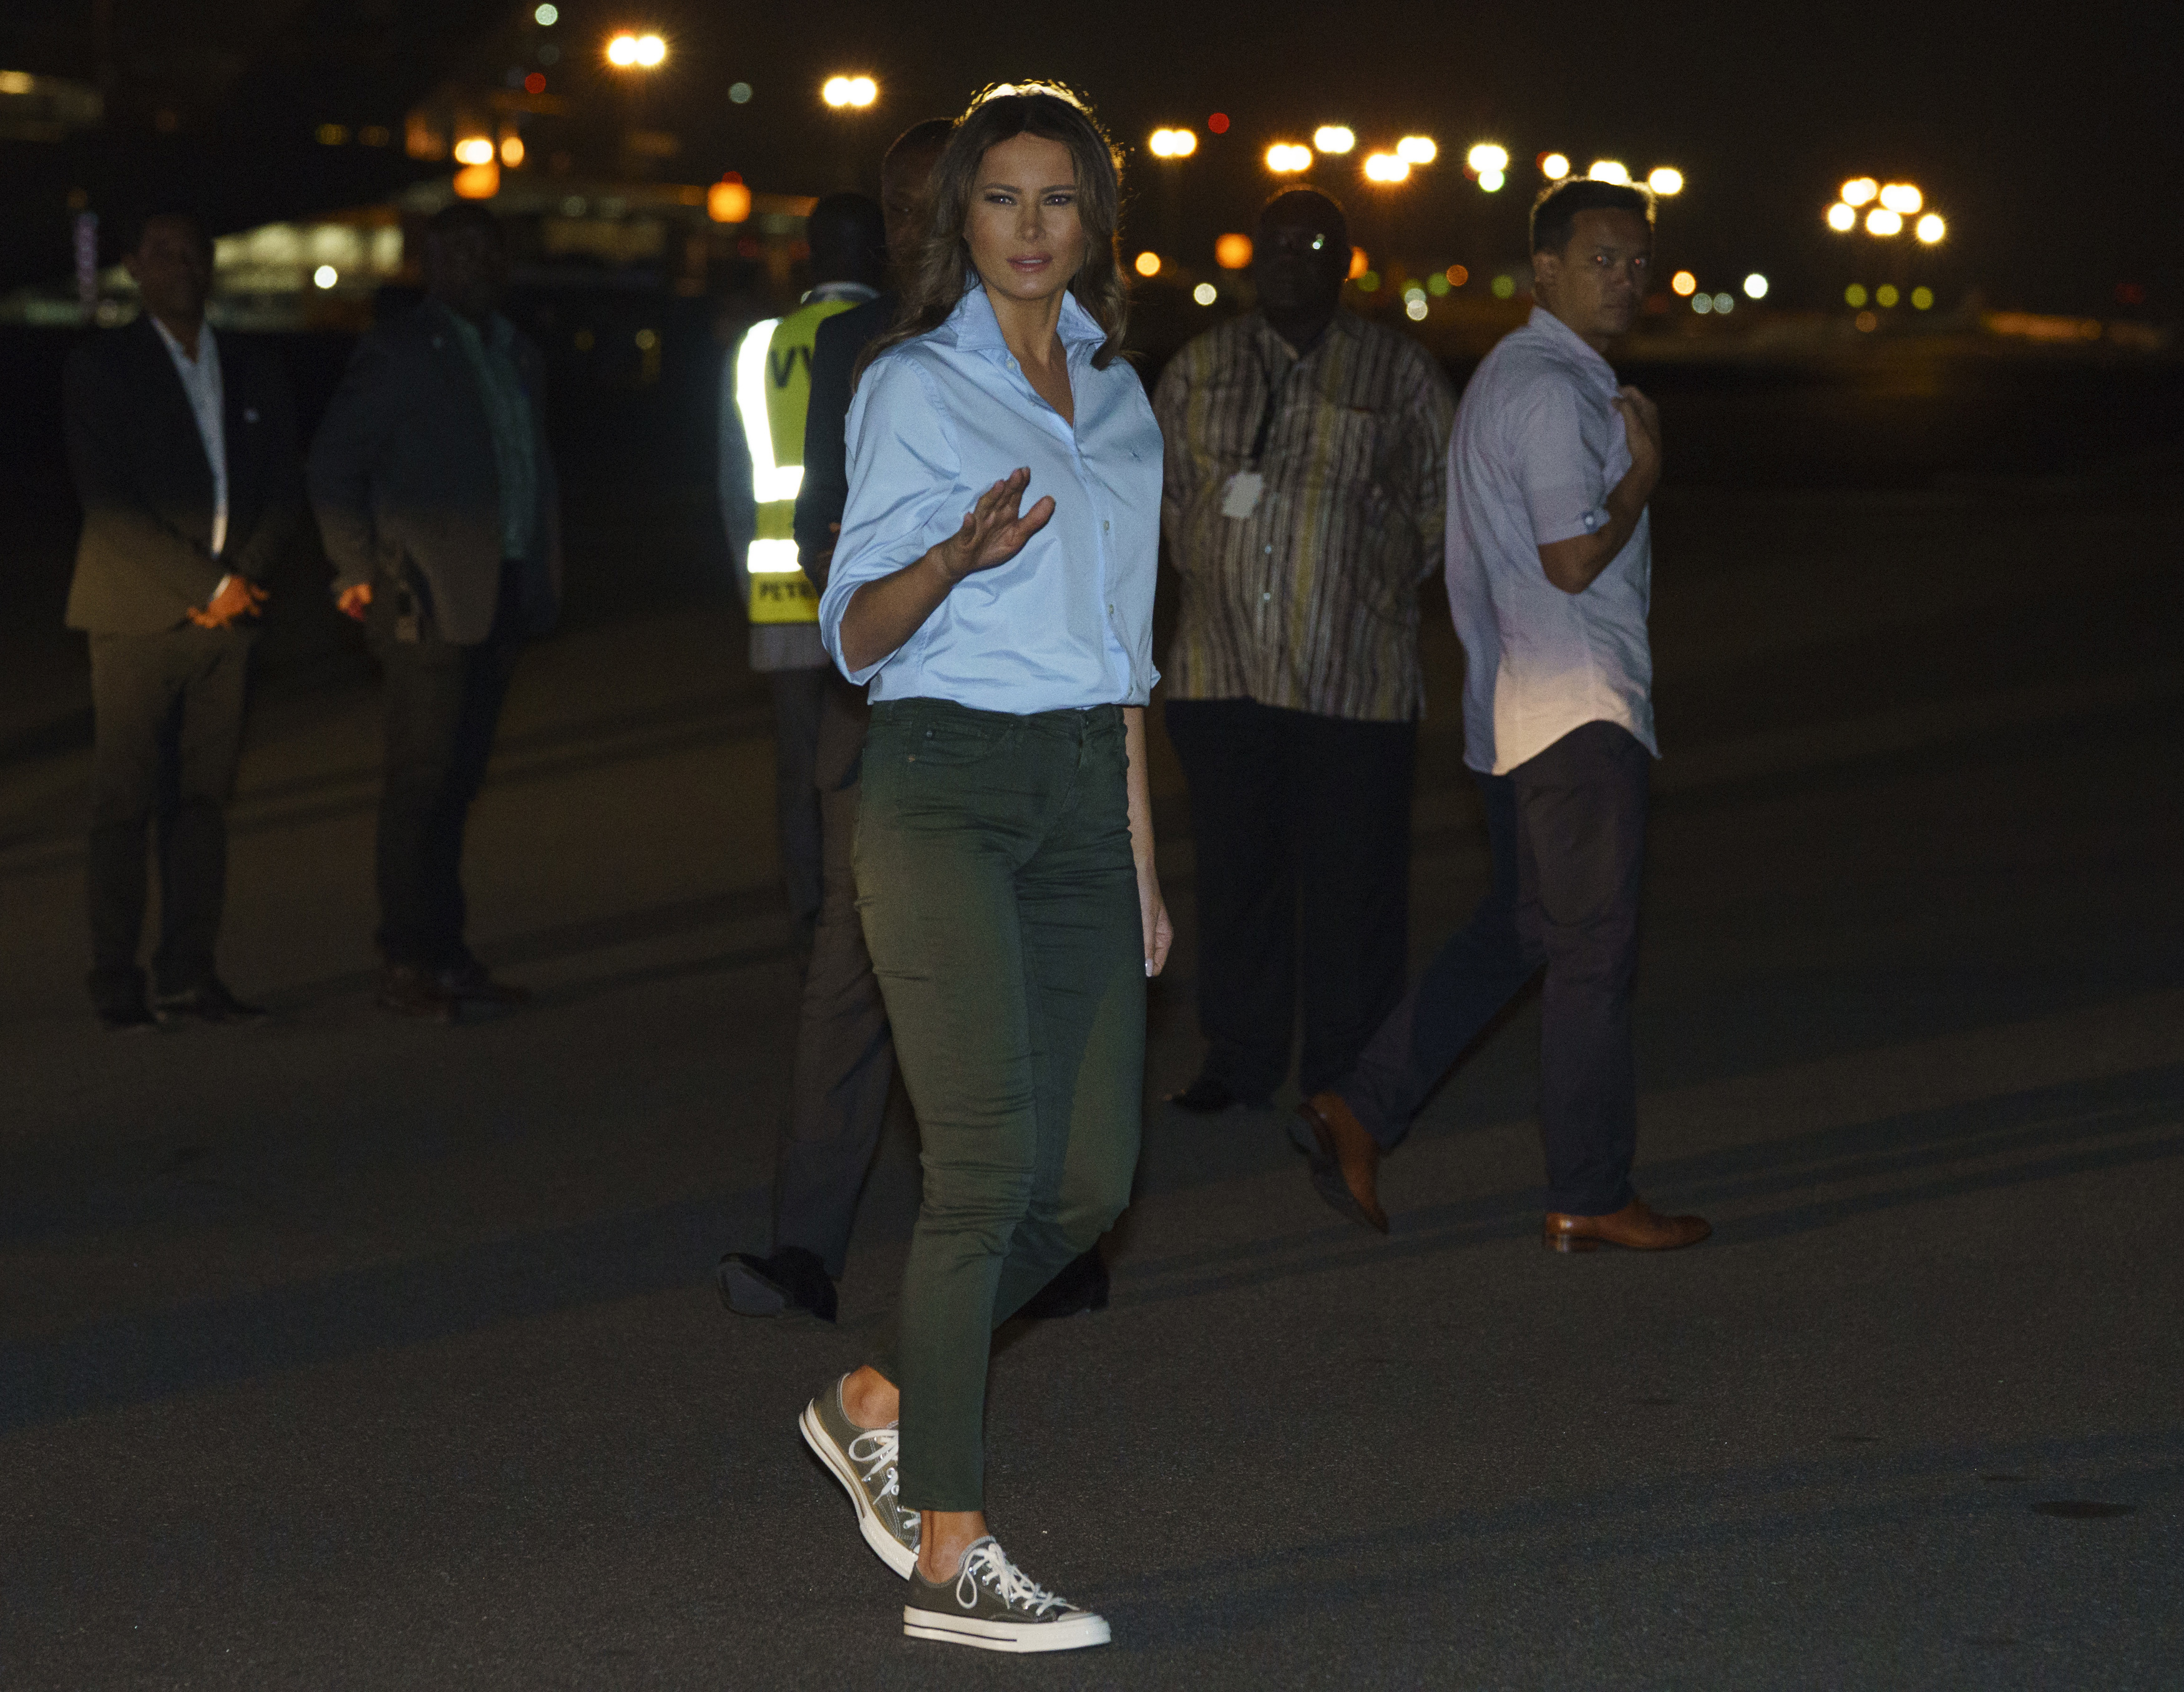 Melania Trump boards a plane at Kotoka International Airport in Accra, Ghana